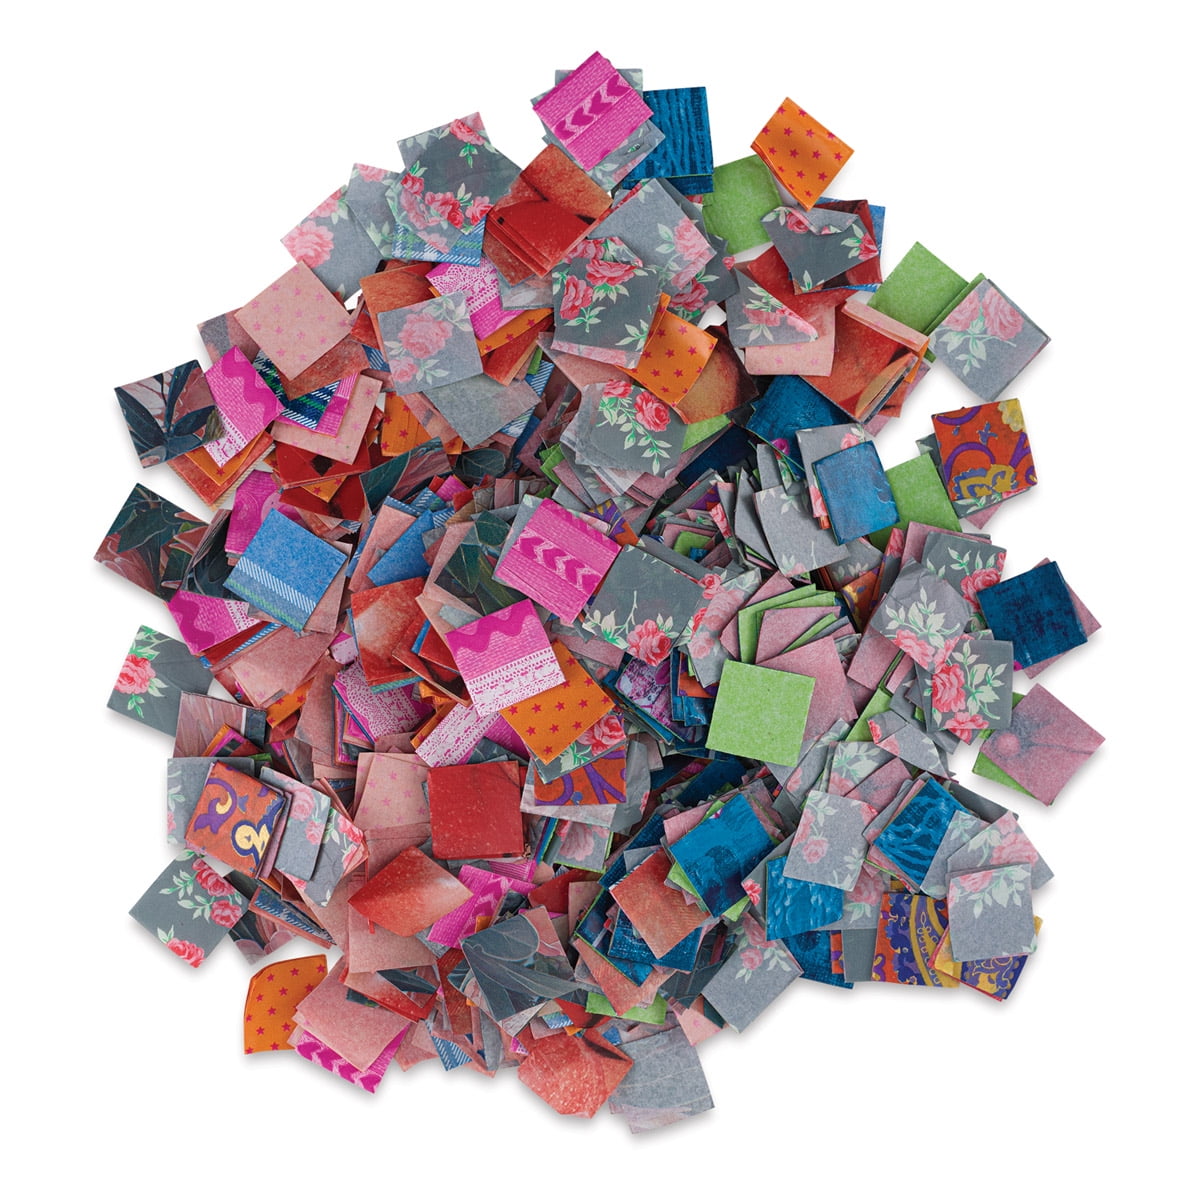 Colorations Peel & Stick Gems - 442 Pieces